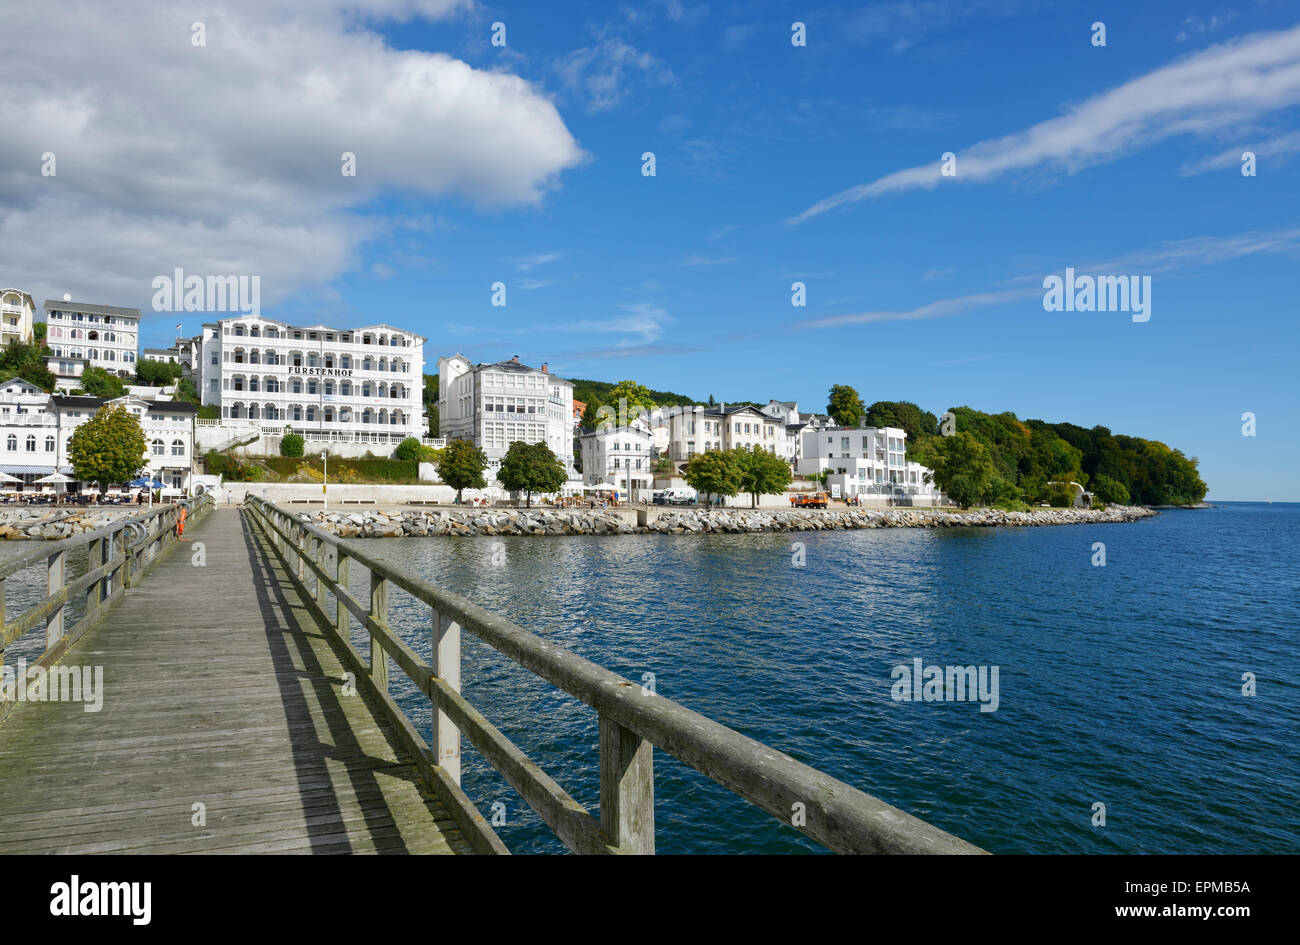 Germany, Ruegen, Sassnitz, Hotel Fuerstenhof at the waterfront Stock Photo